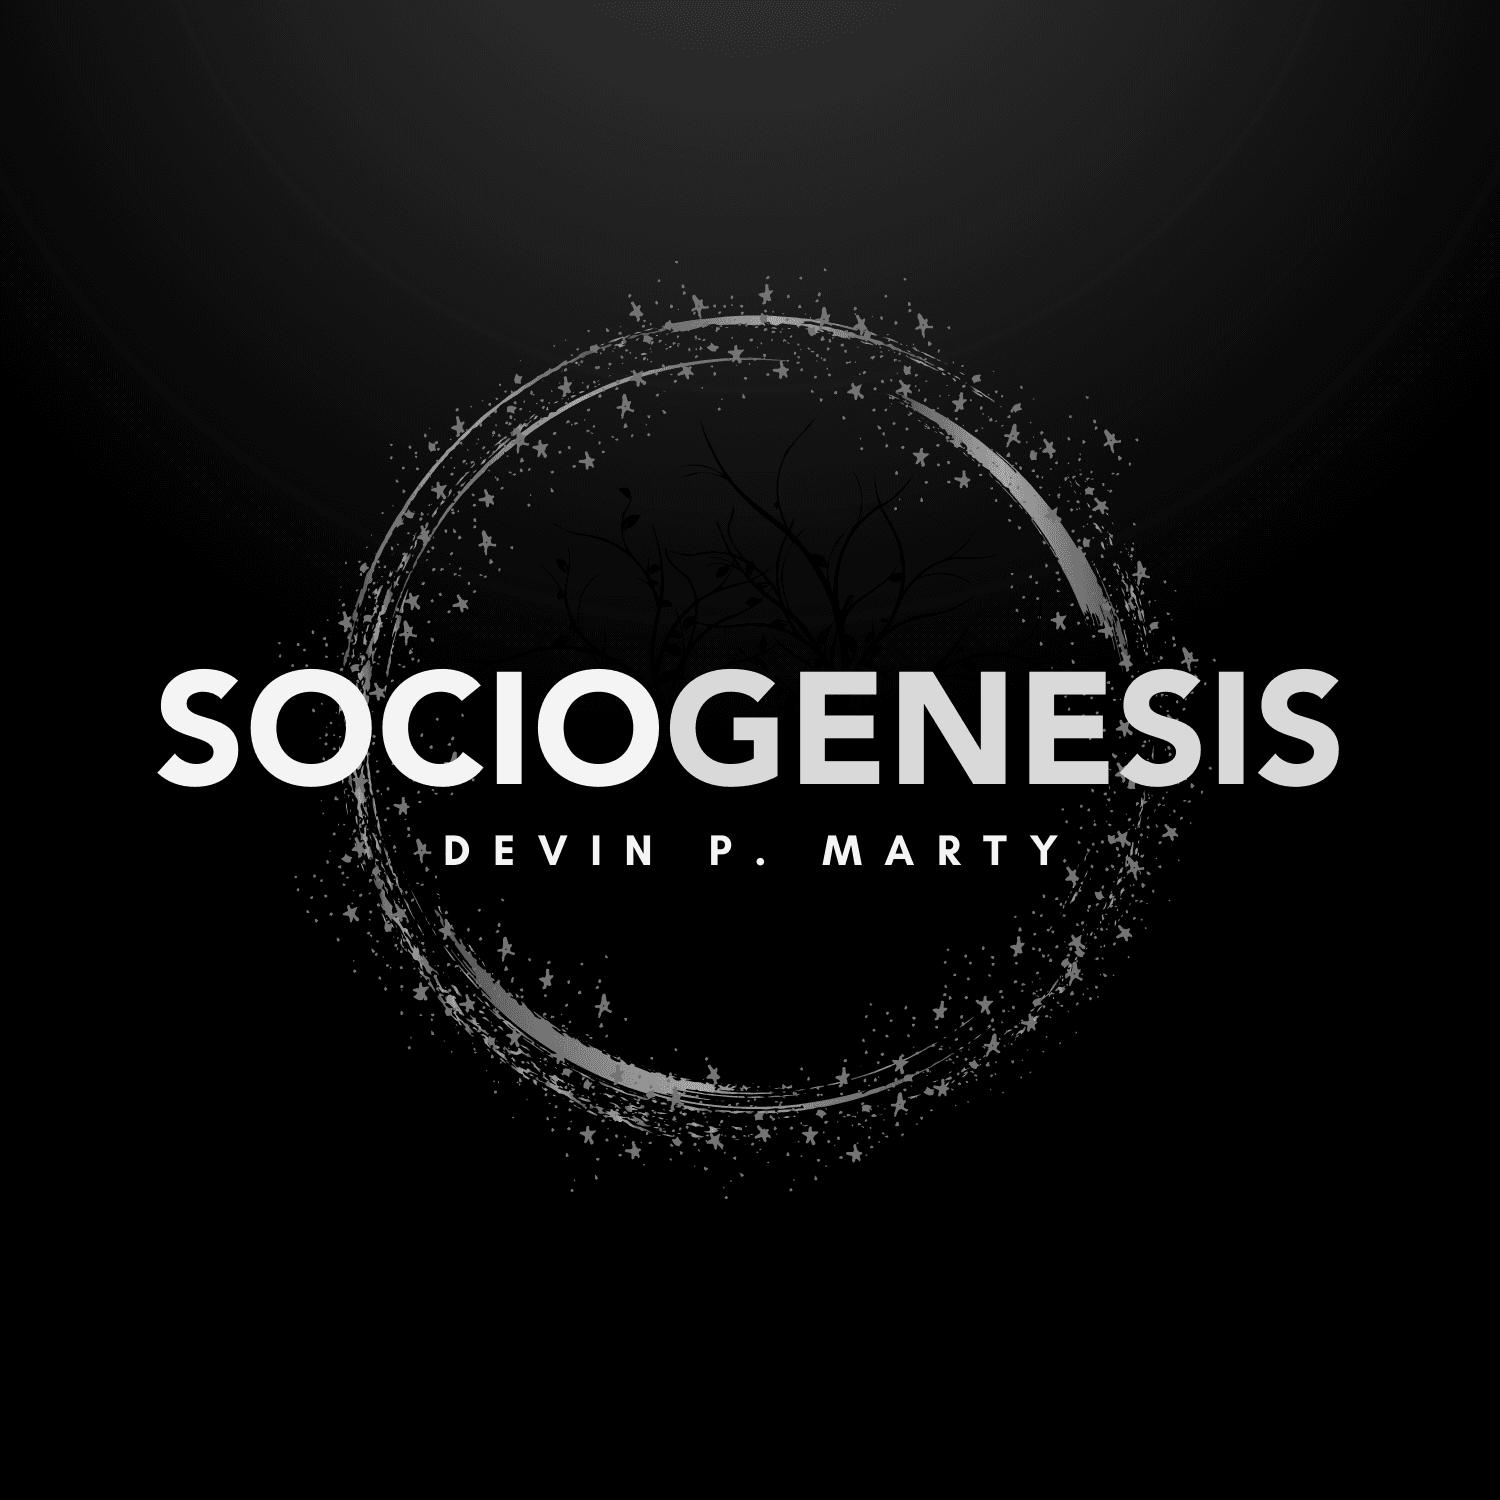 Sociogenesis